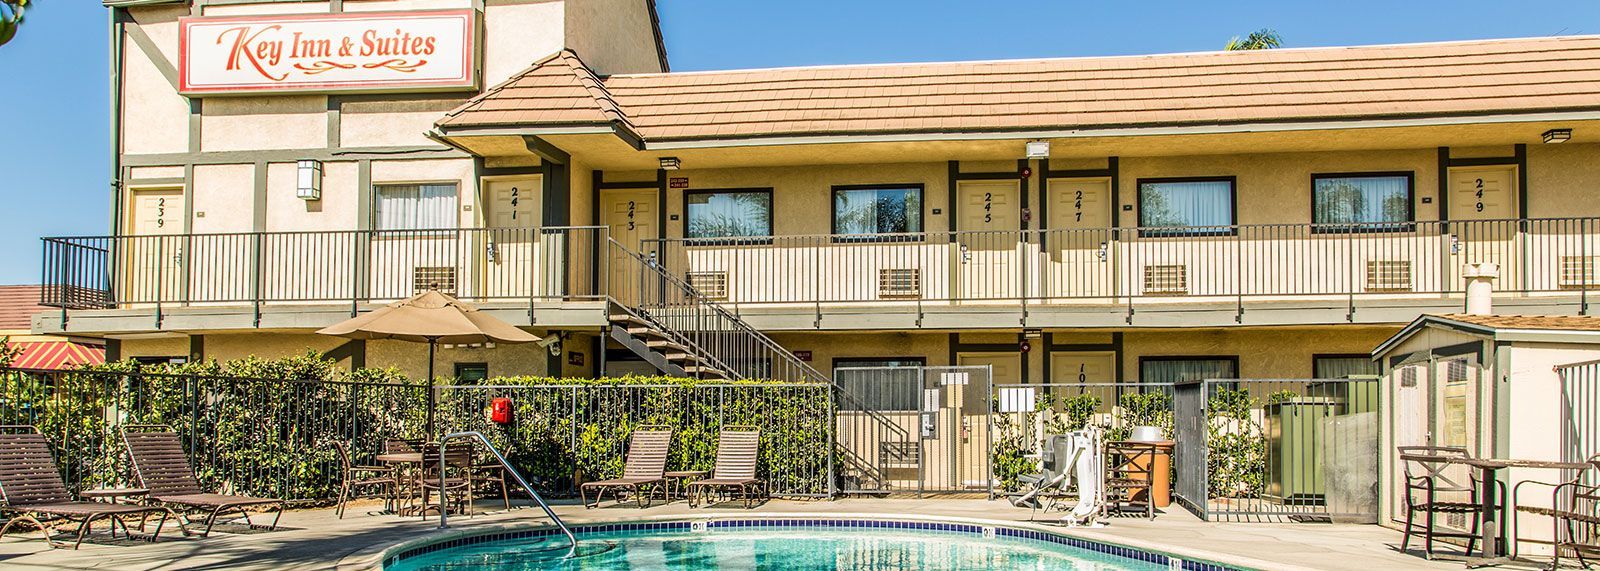 key-inn-and-suites-tustin-california-home1-top